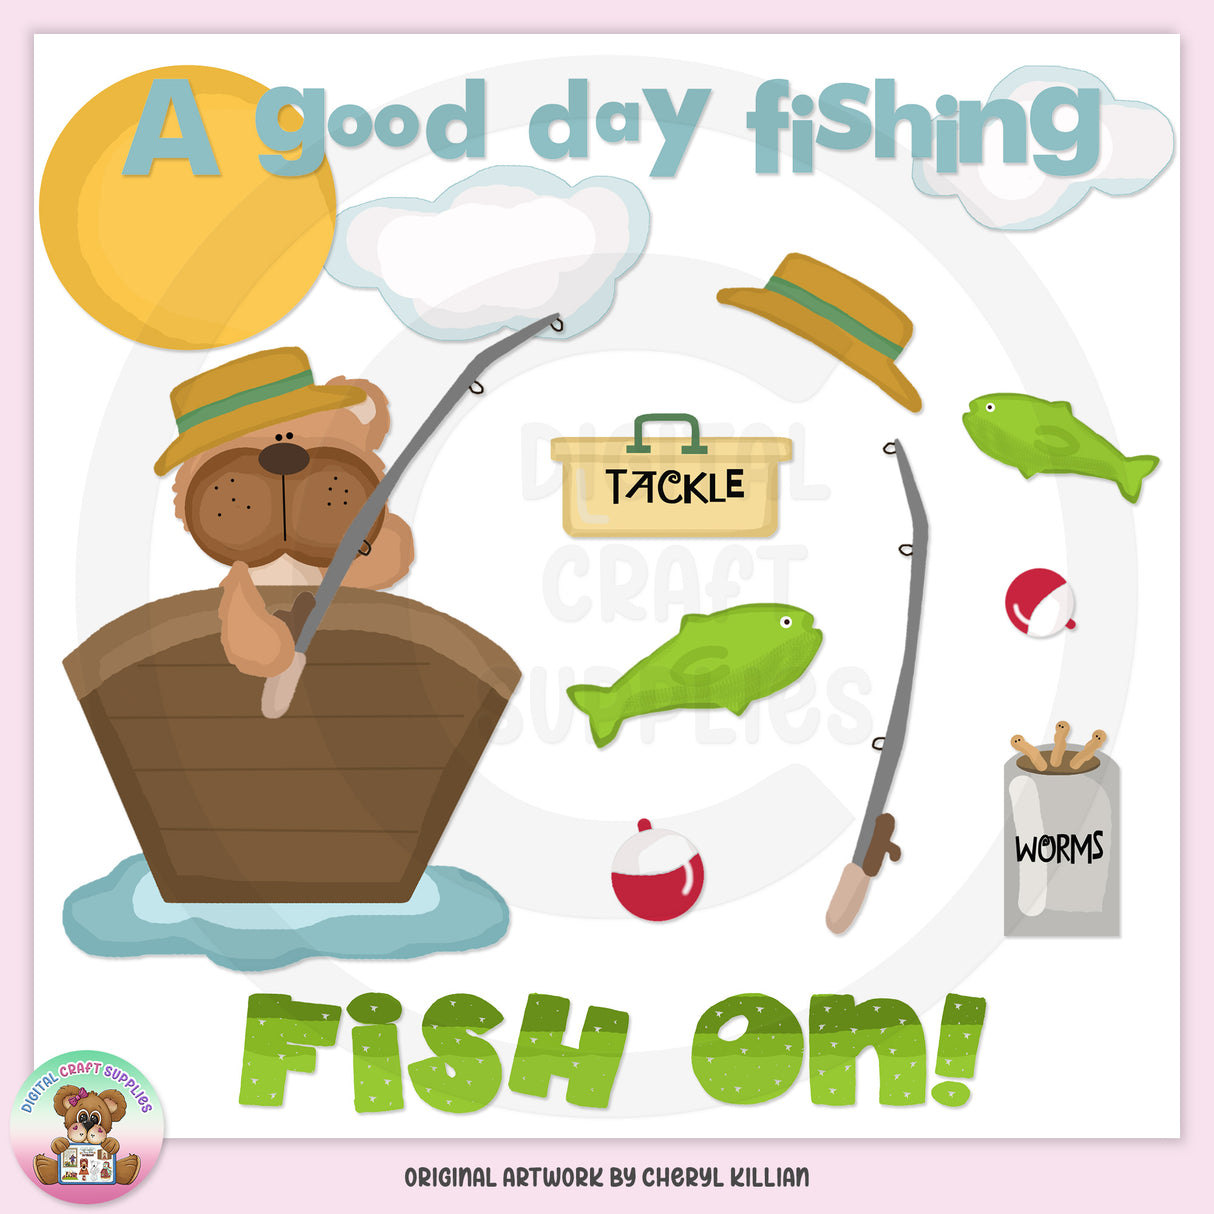 A Good Day Fishing - Clip Art